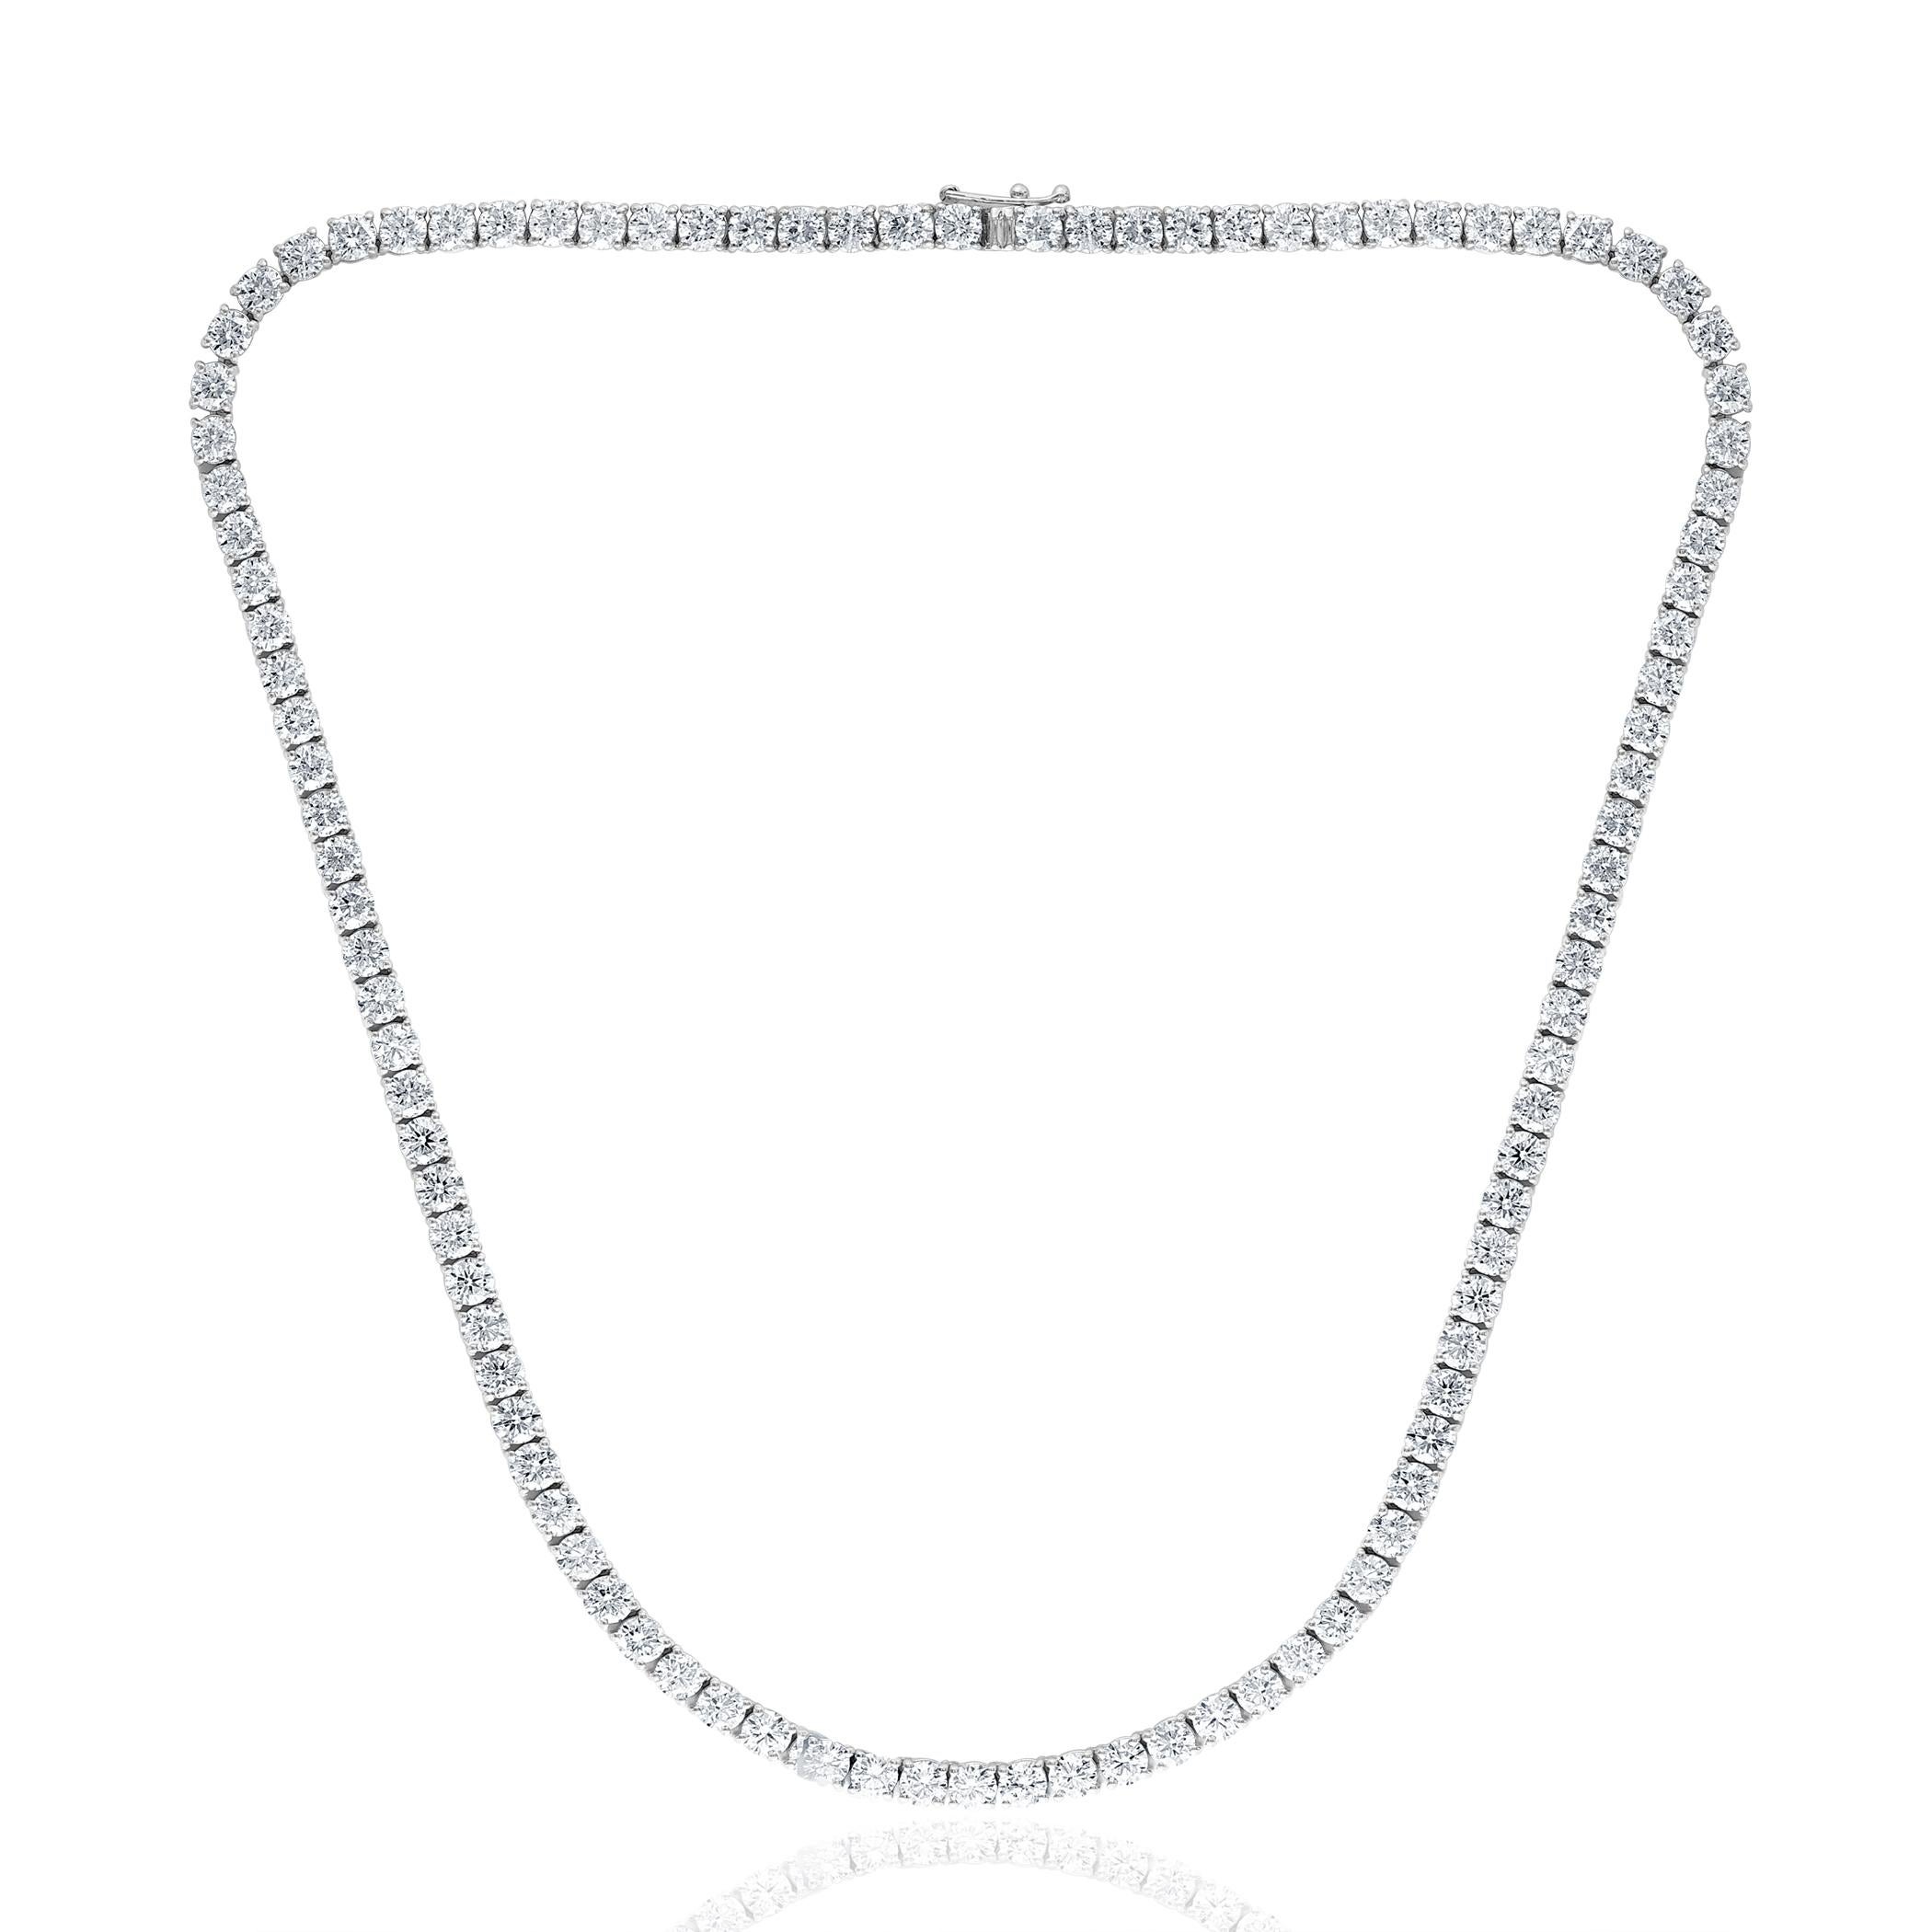 Brilliant Cut 25.03 Carat Diamond Tennis Necklace in 14K White Gold For Sale